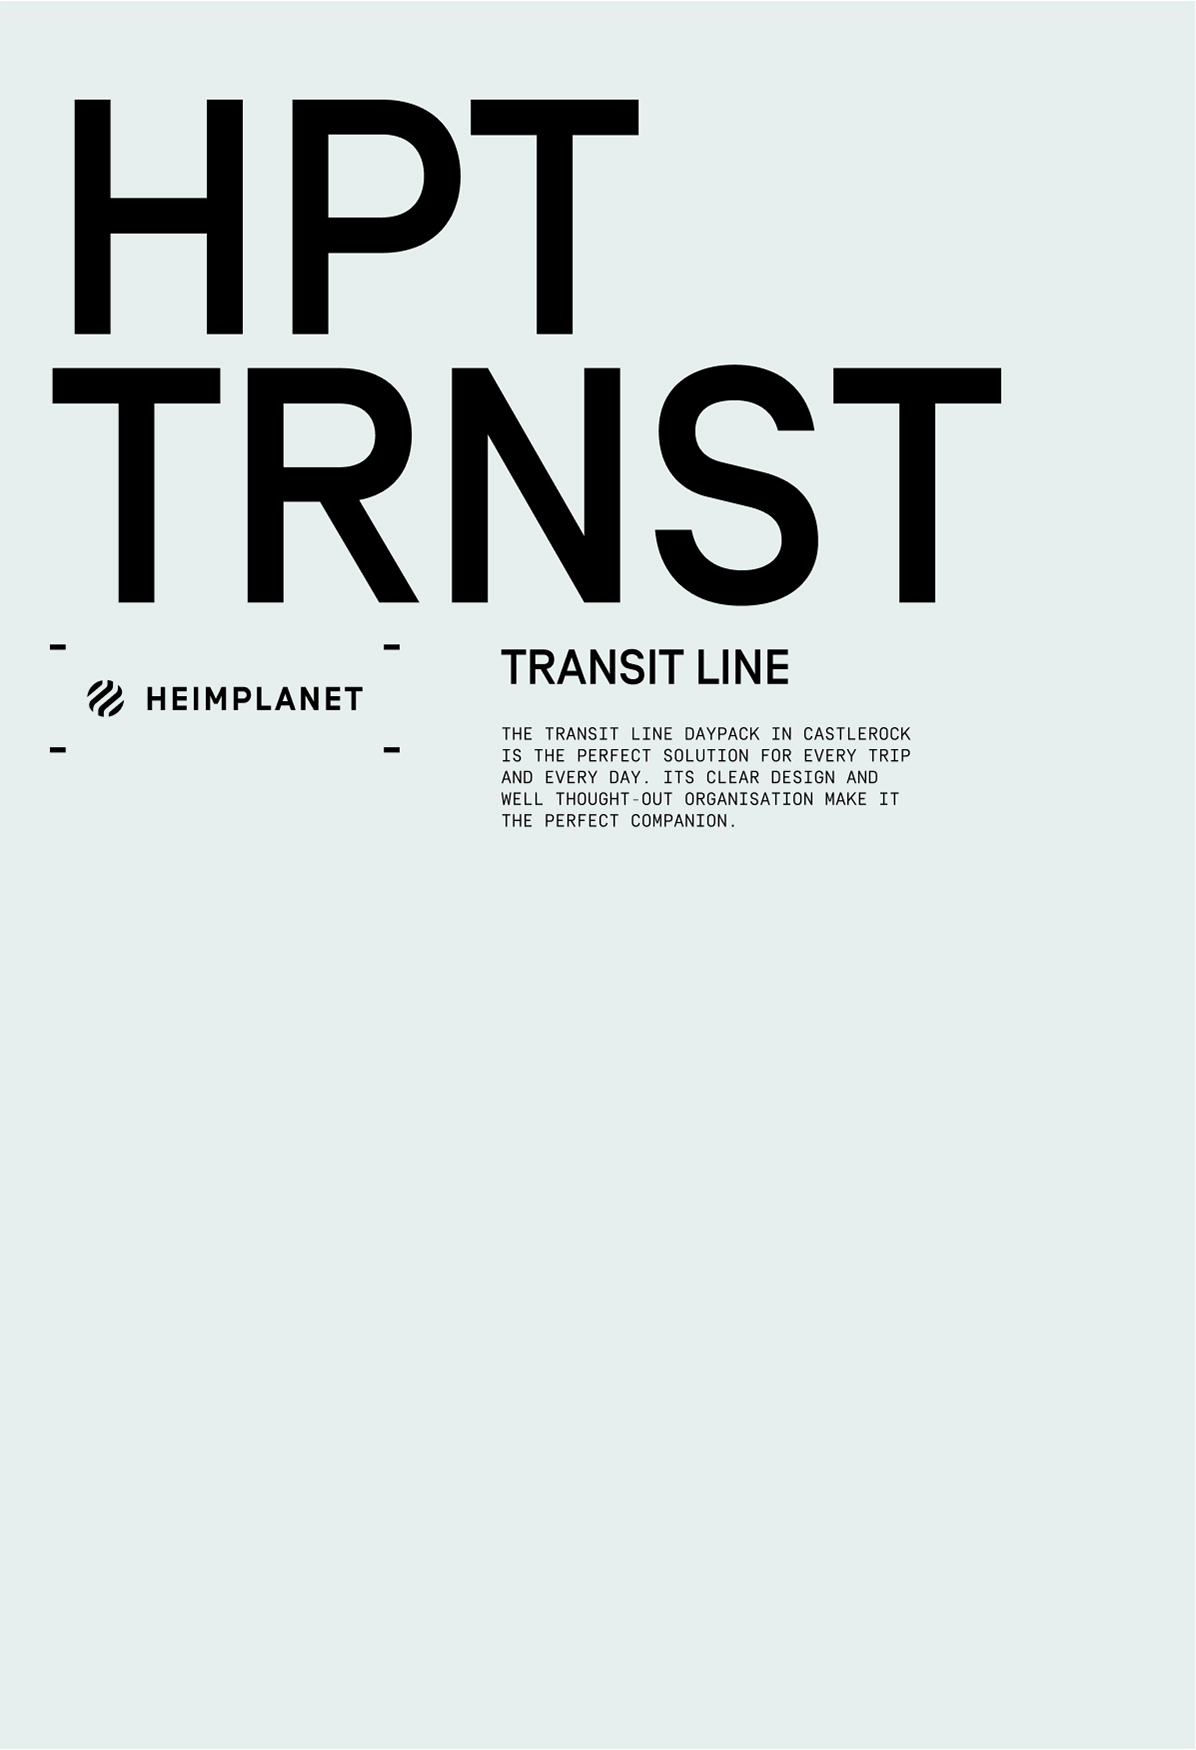 hpt_trnst_info_text_line